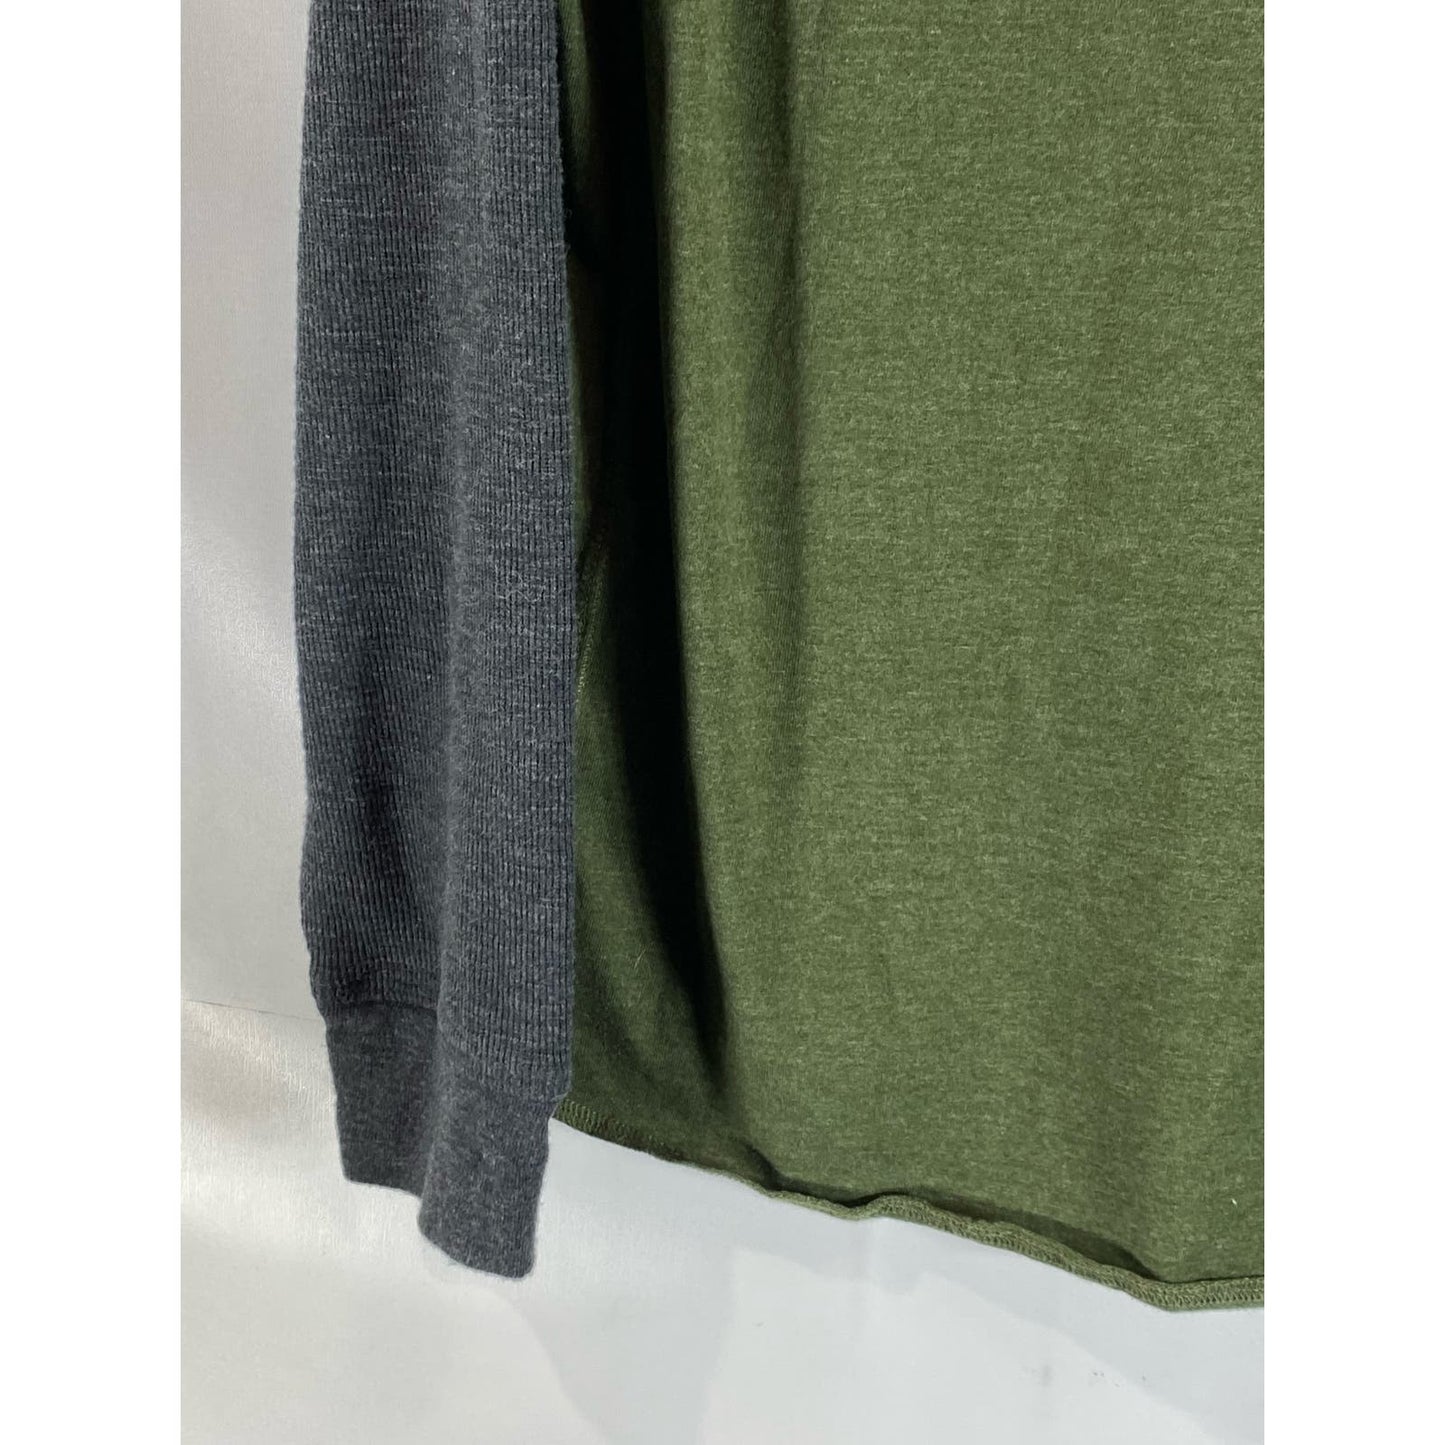 LUCKY BRAND Men's Green Colorblock Crewneck Thermal Long Sleeve T-Shirt SZ XL